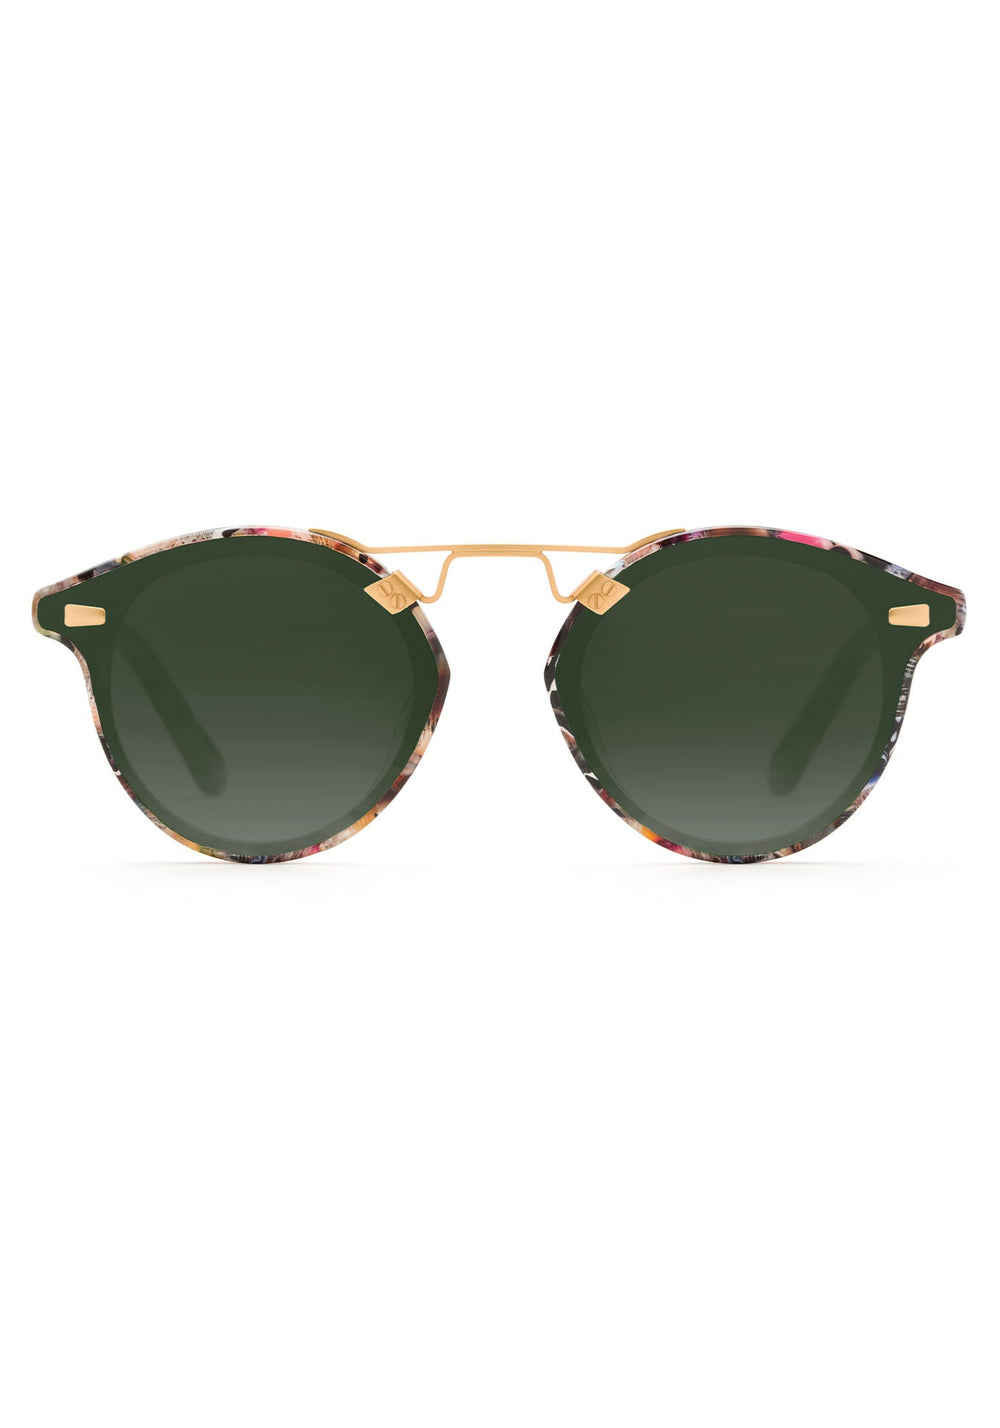 STL NYLON | Capri 24K Mirrored Handcrafted, luxury colorful acetate KREWE sunglasses